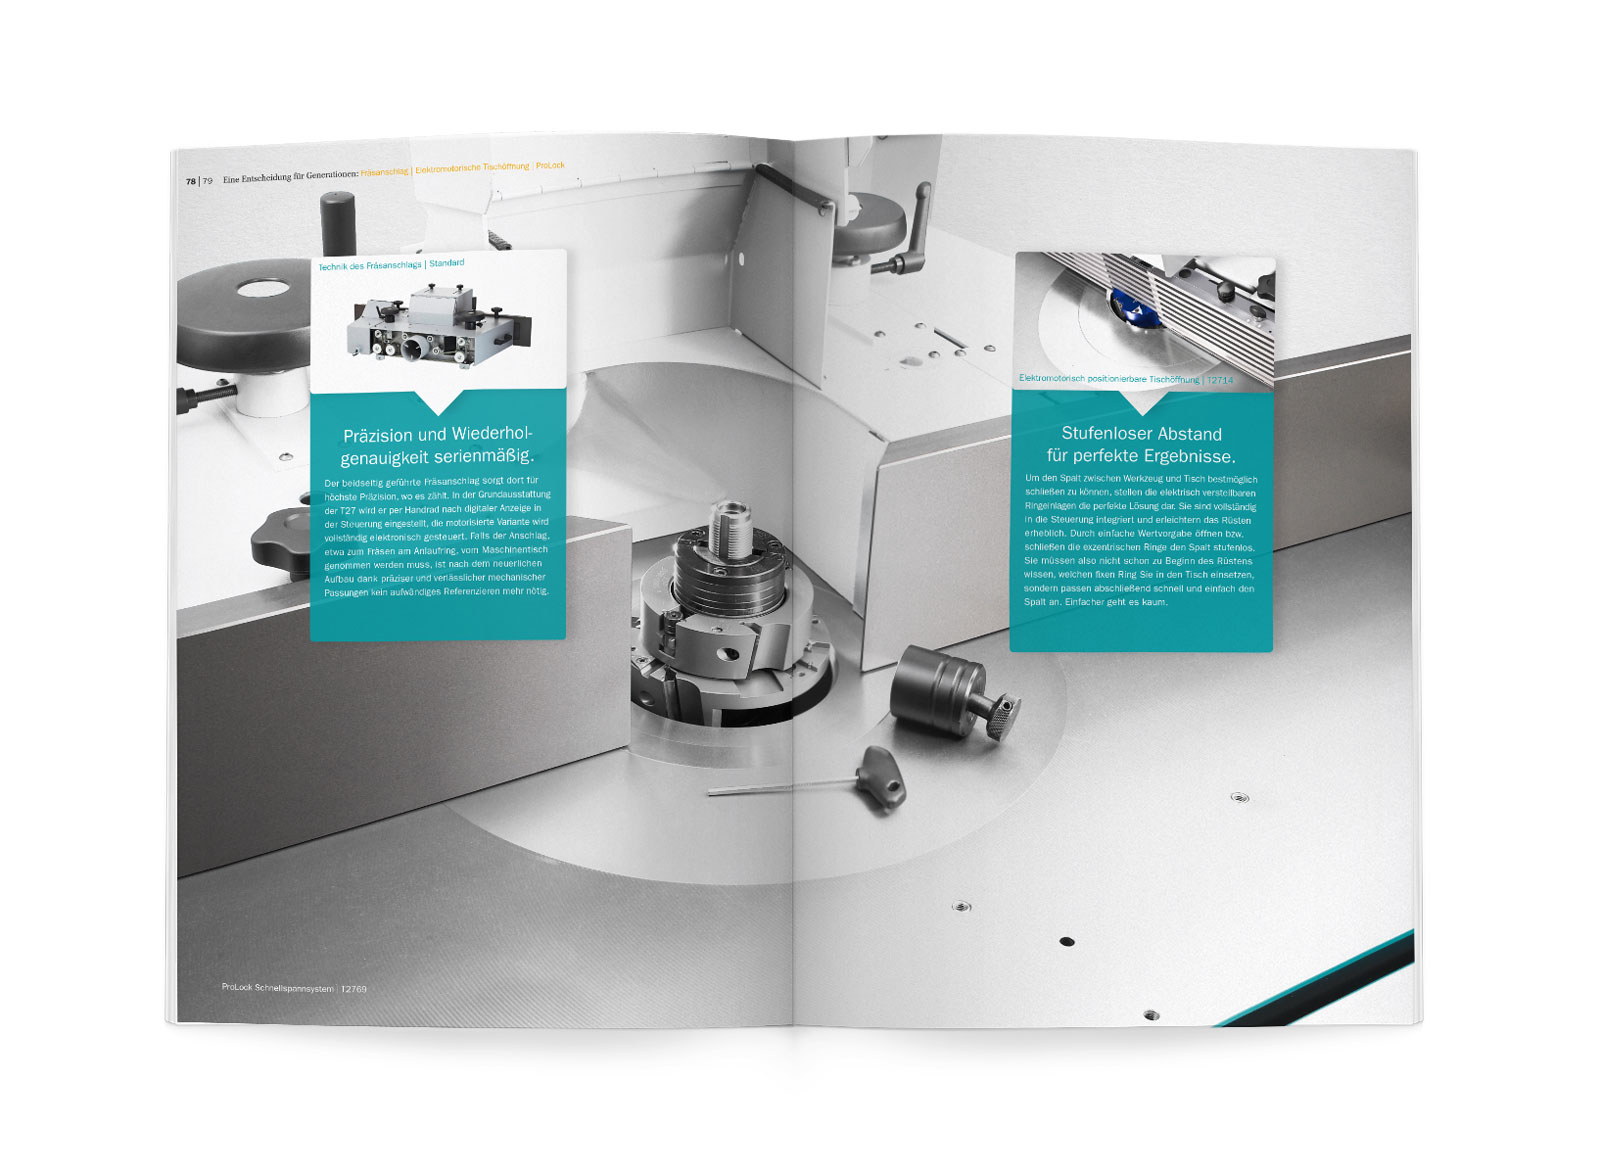 "Printmedien | Corporate Design MARTIN Maschinenbau – ZWEIPRO Werbeagentur"